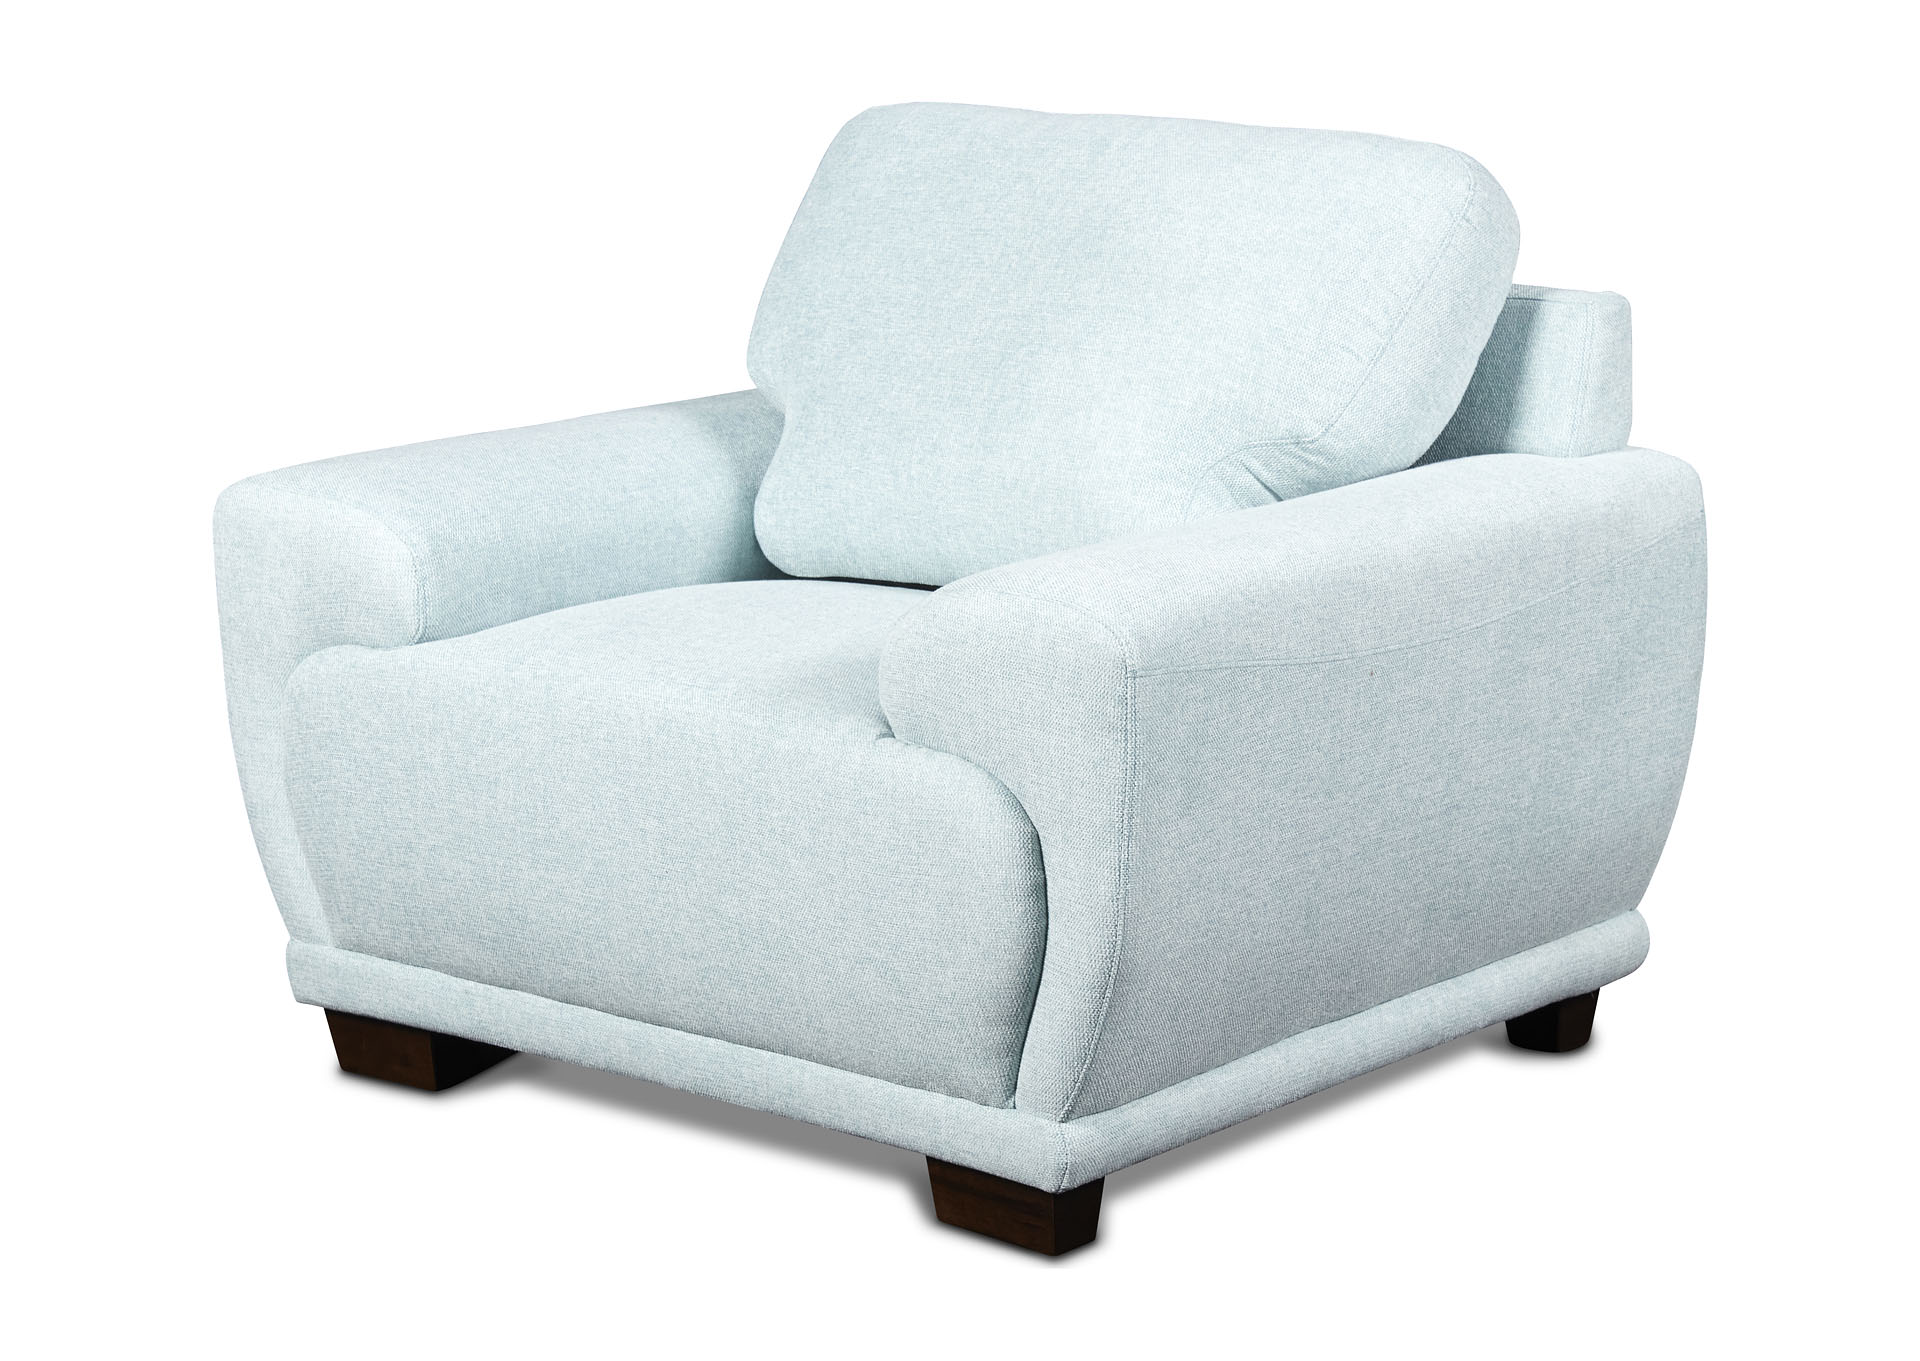 Sausalito Sea Chair,New Classic